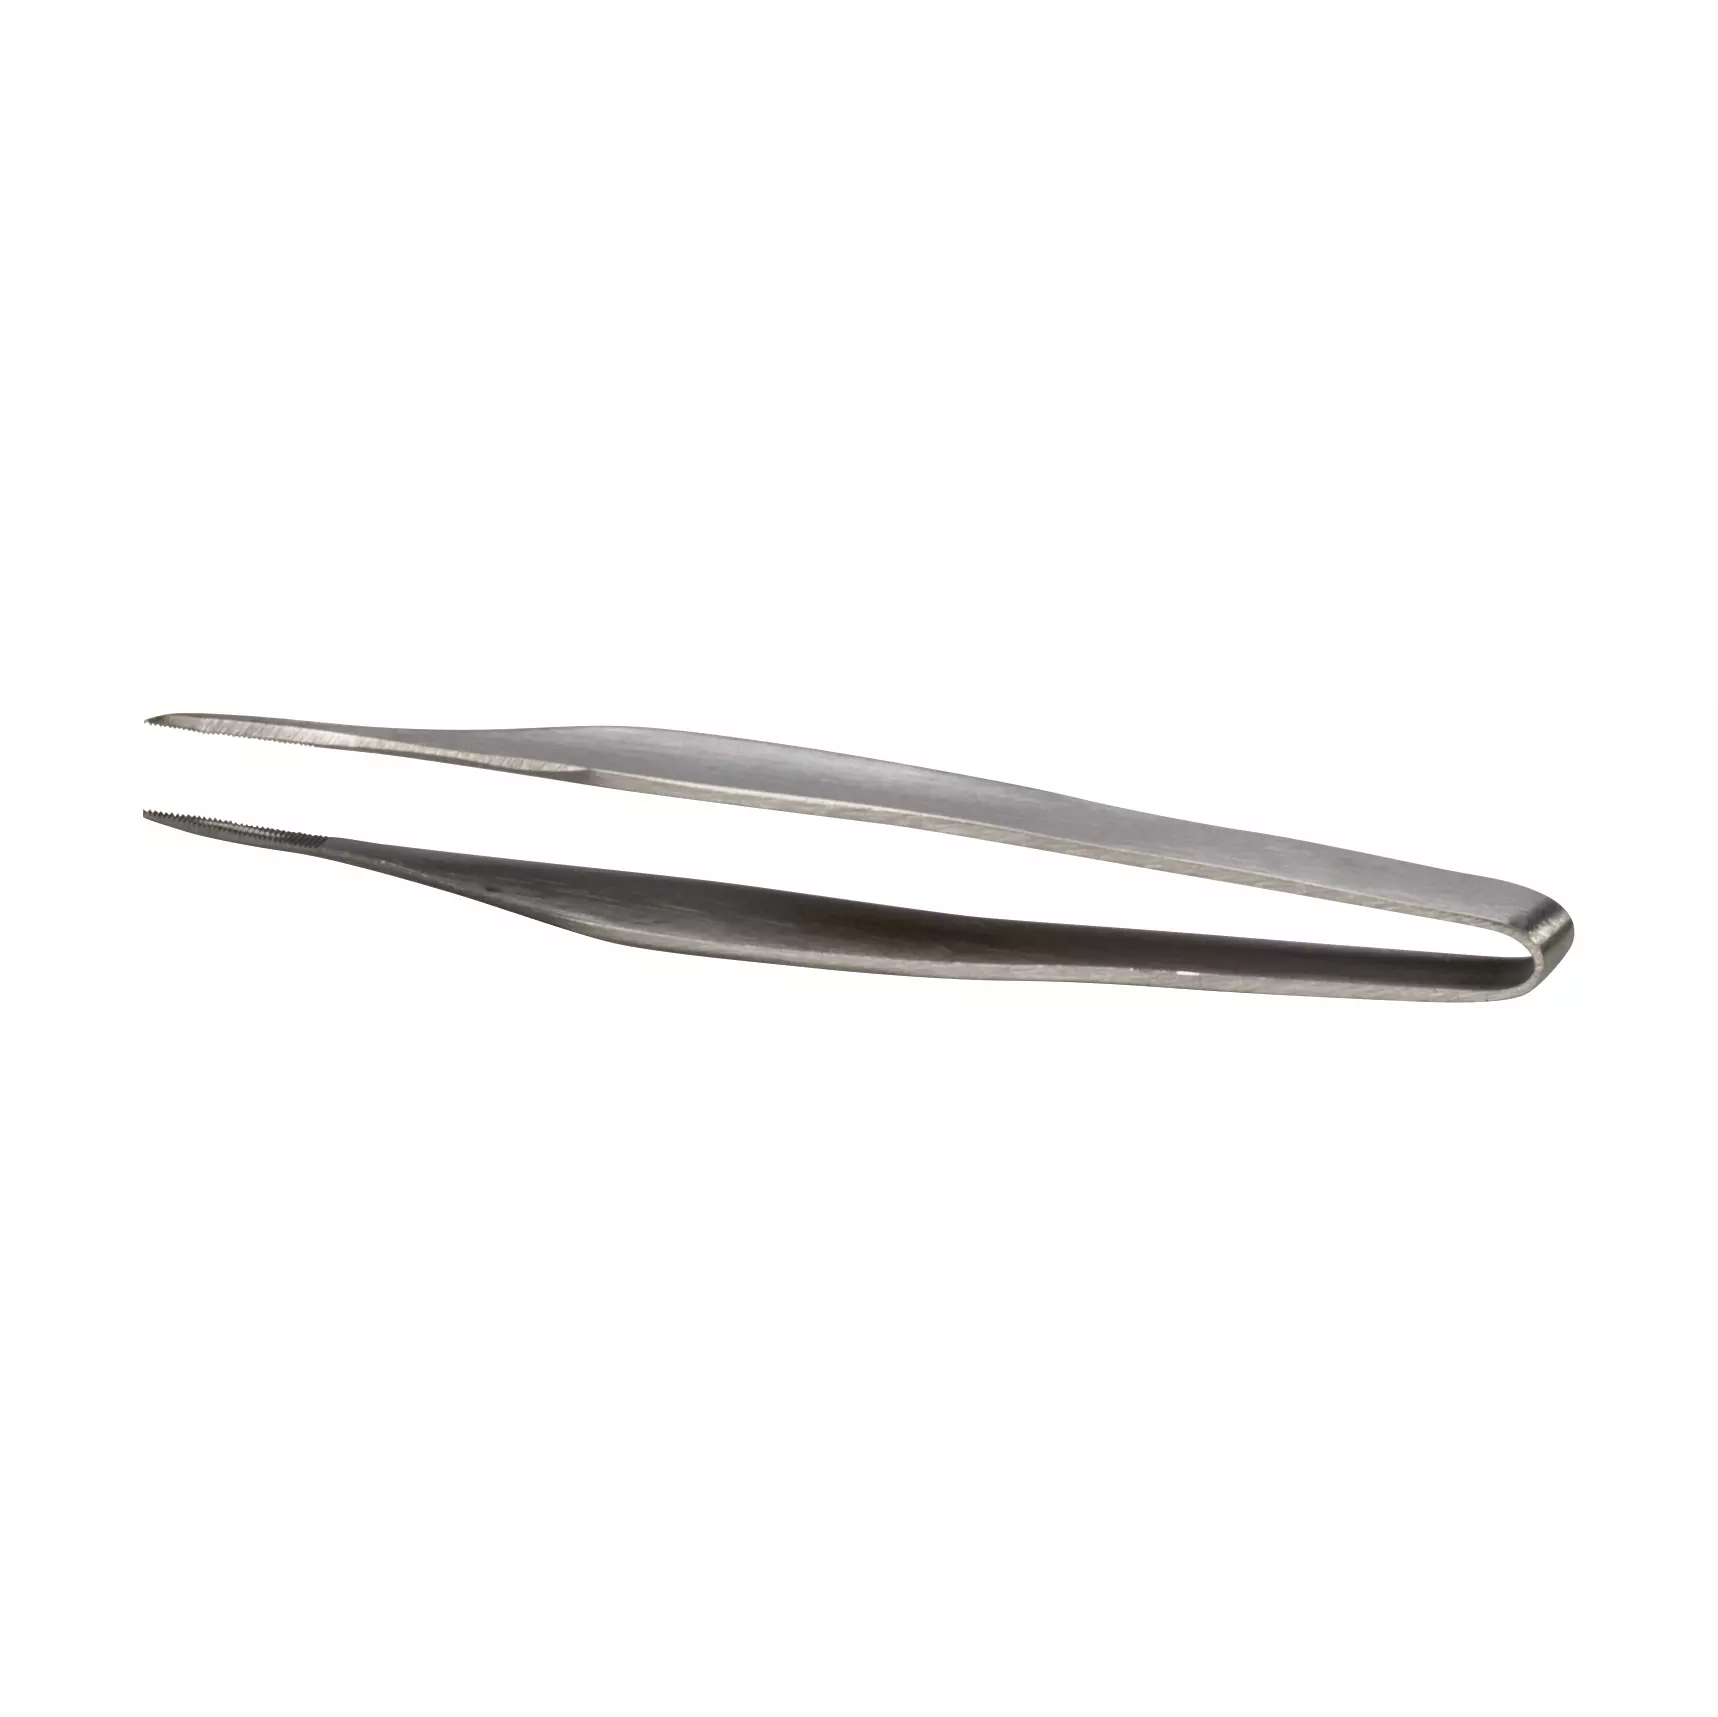 Splinter tweezers according to Feilchenfeld, stainless, 11.5 cm